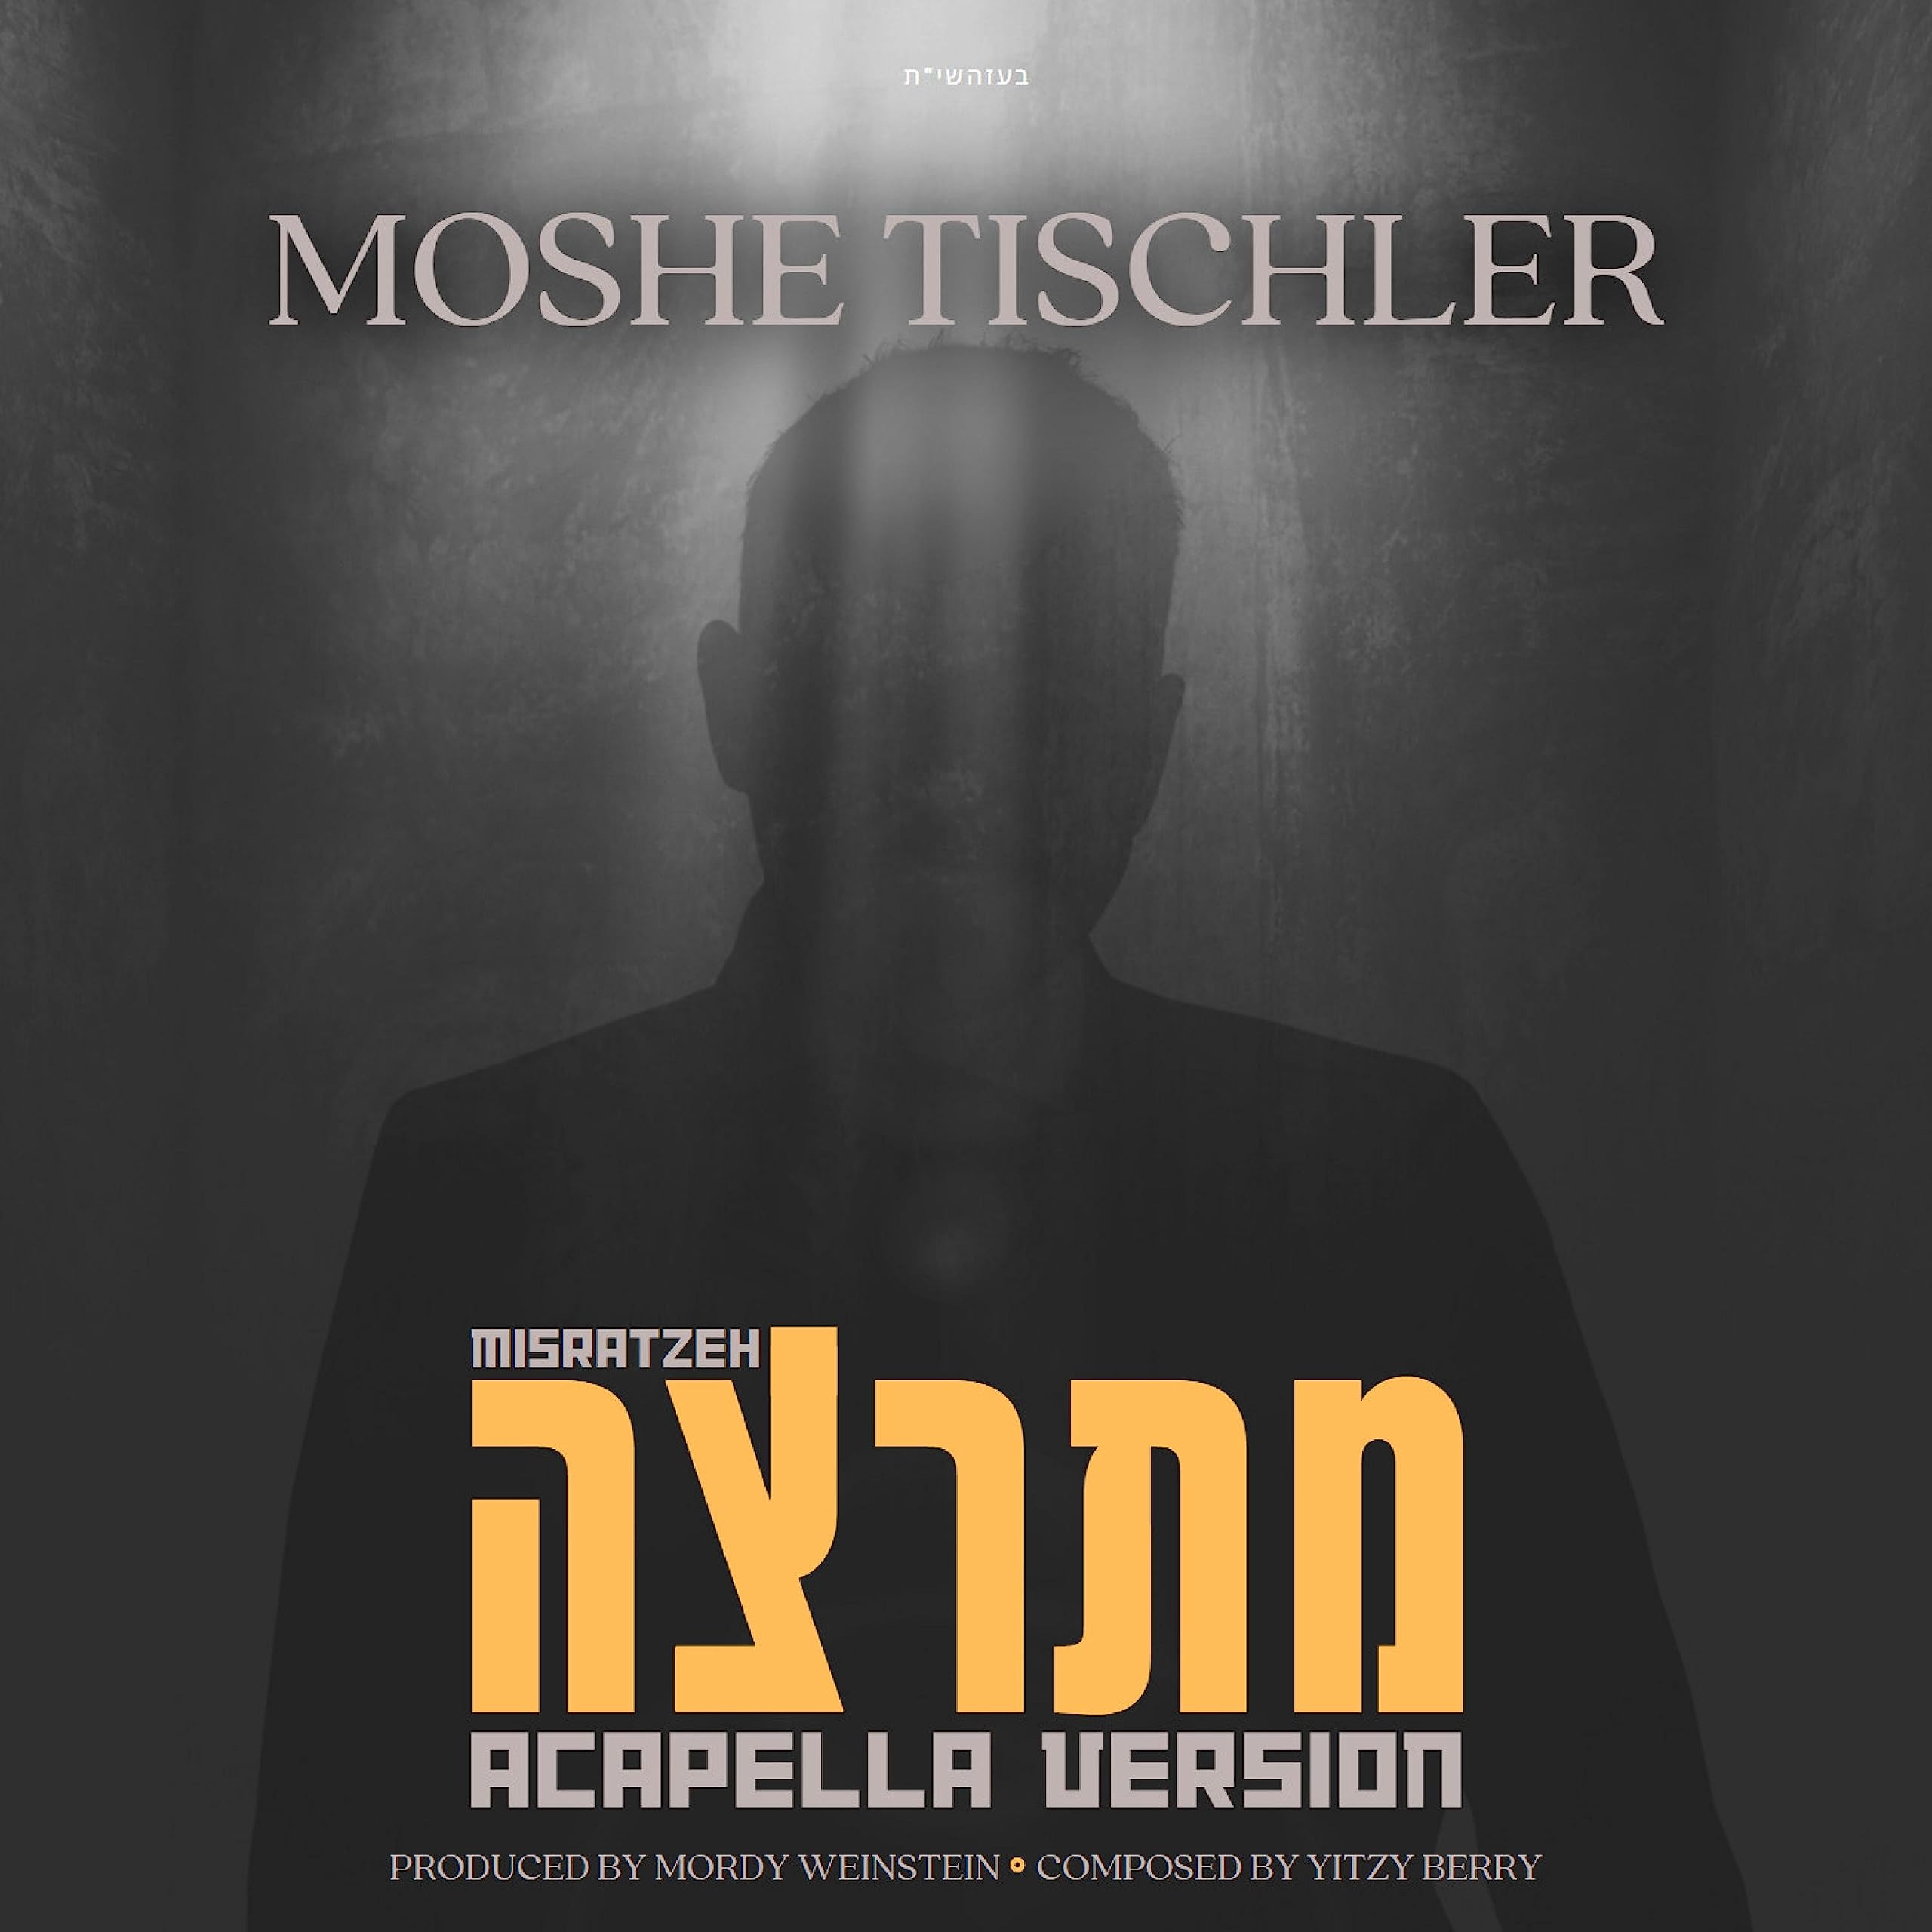 Moshe Tischler - Misratzeh [Acapella] (Single)